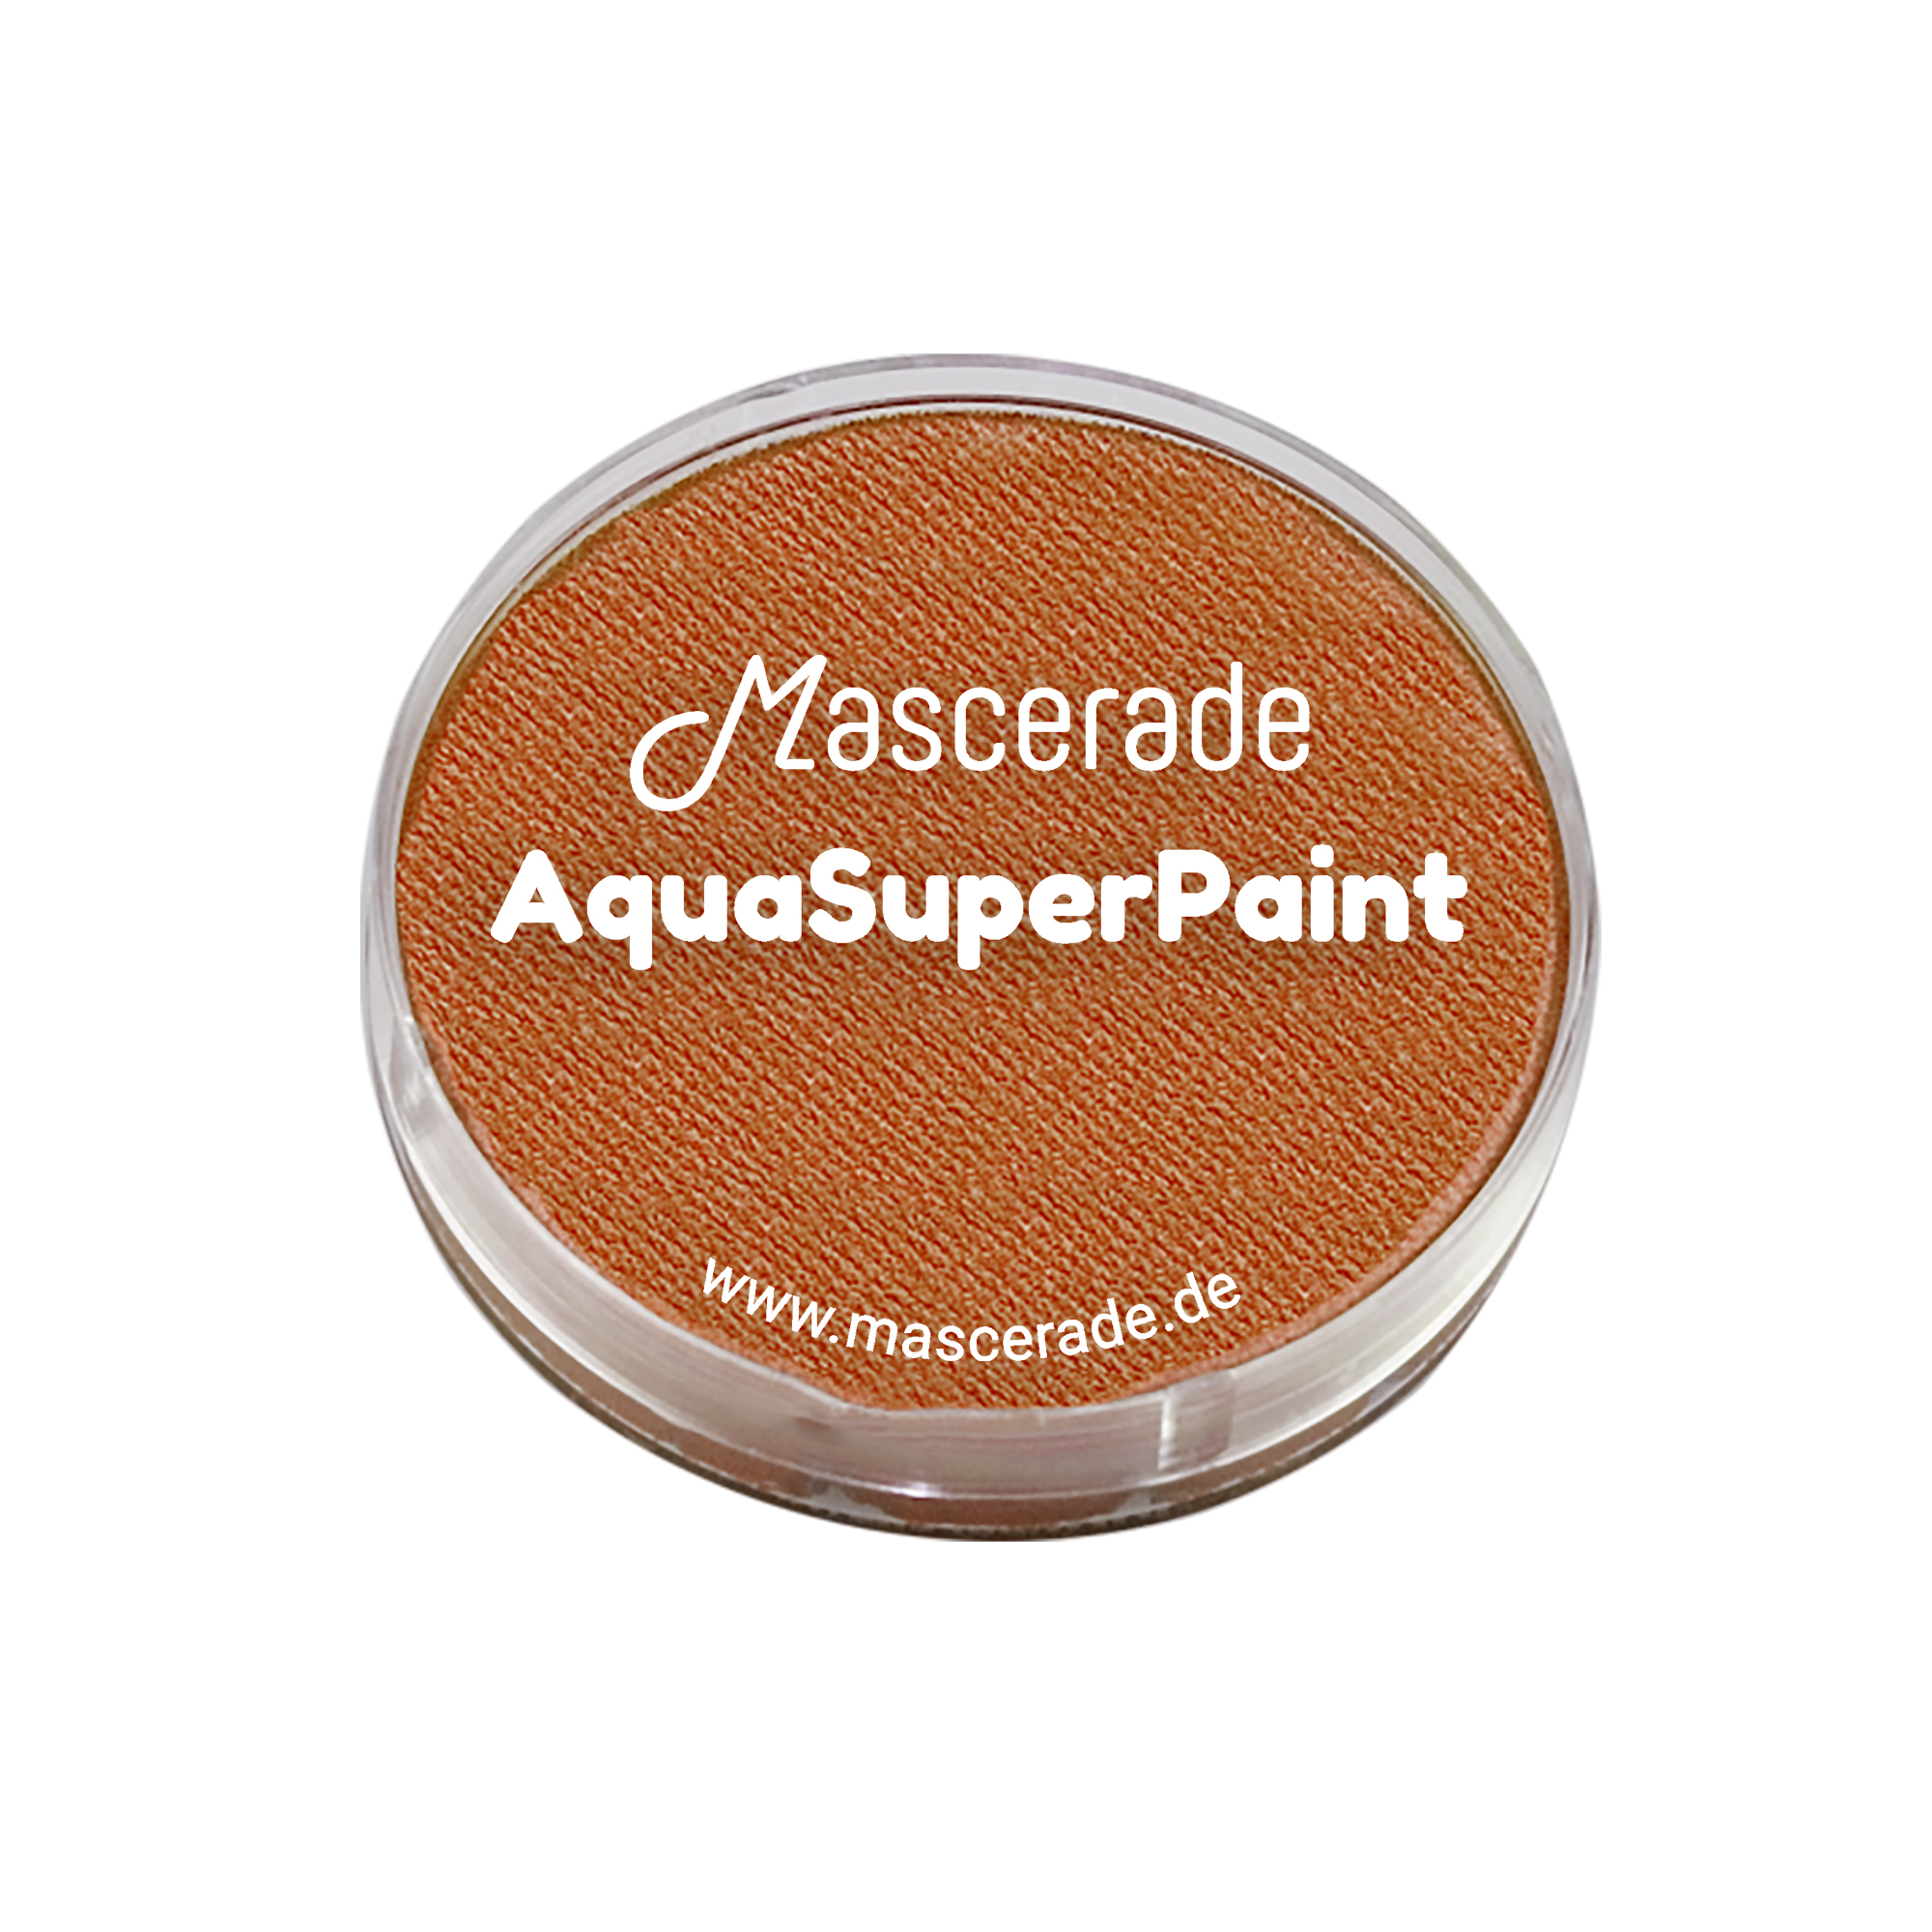 Mascerade AquaSuperPaint Bronze mit Glitter 12 ml Dose